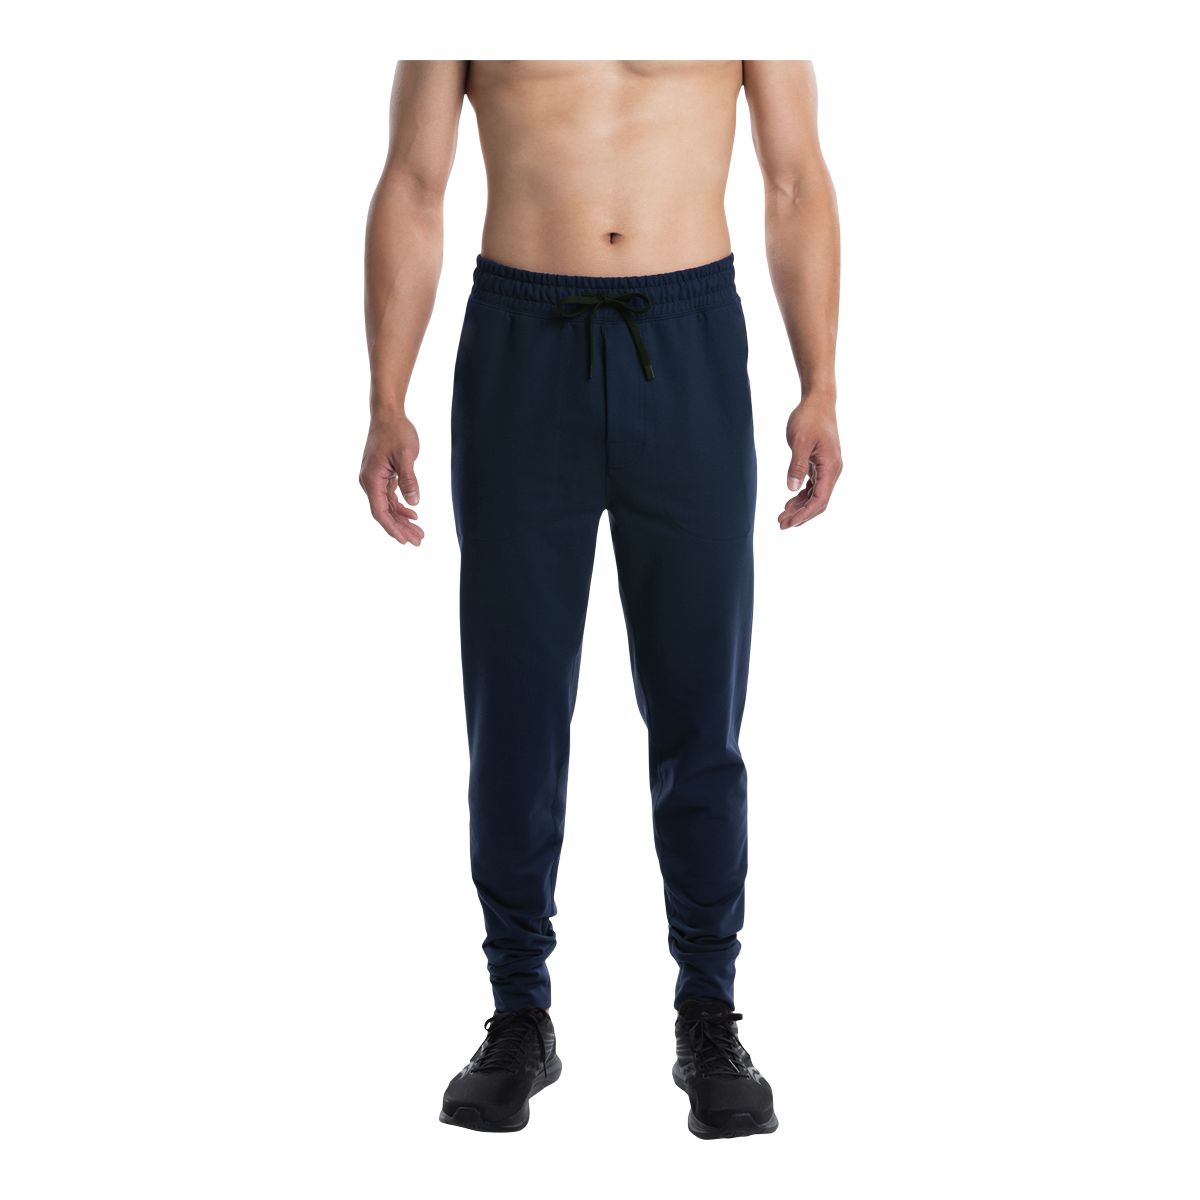 Freeflex™ Jogger in Men's Pants